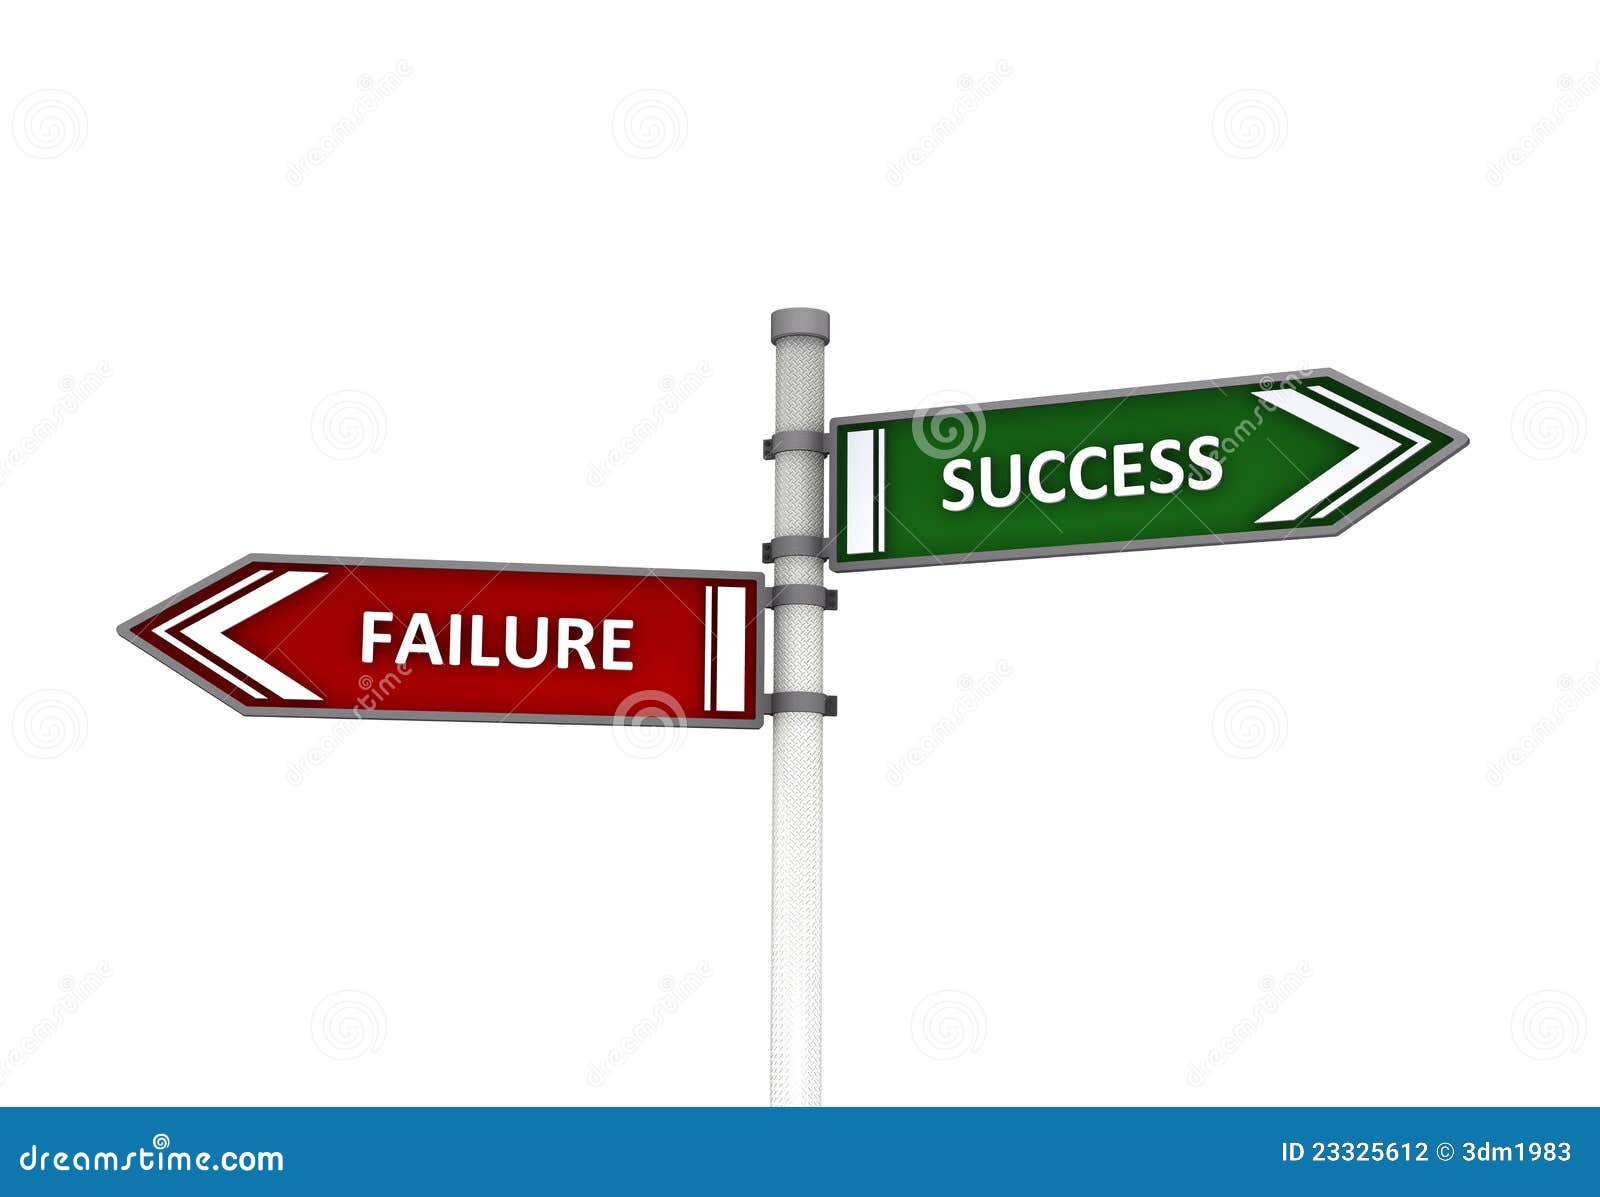 success or failure signpost